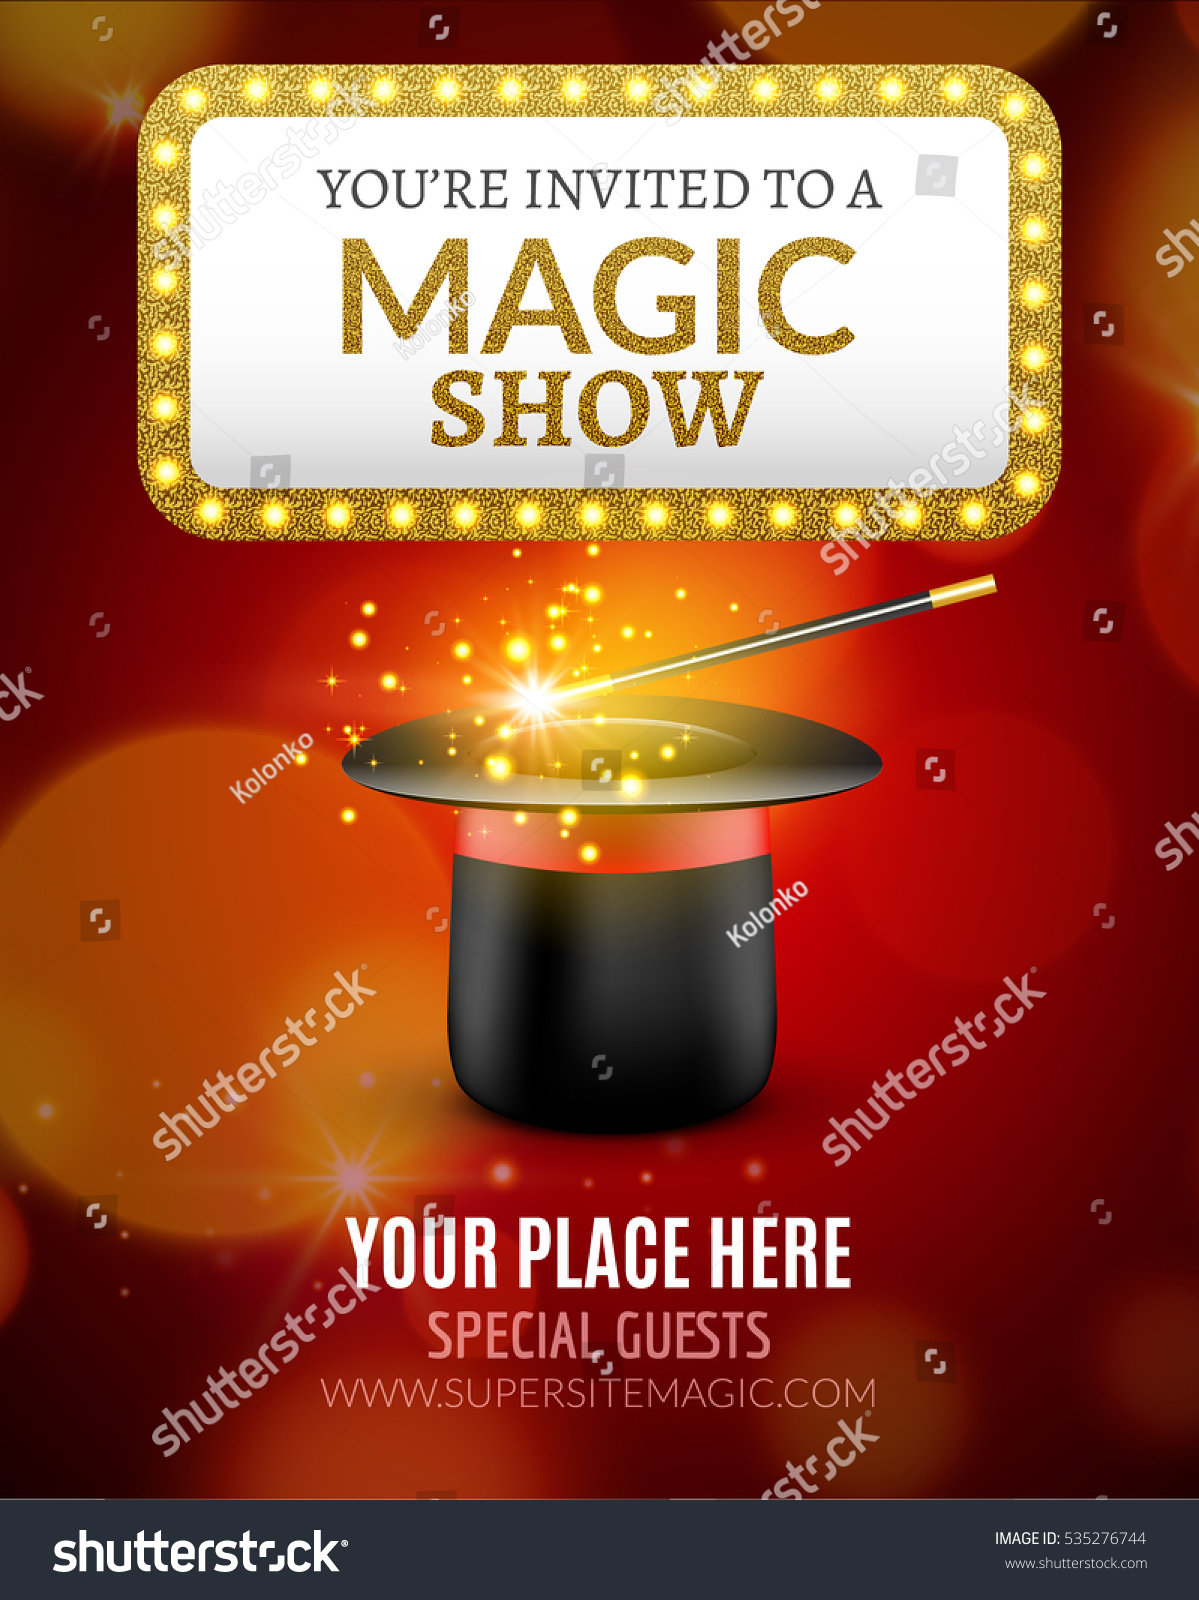 magic-show-poster-design-template-magic-show-flyer-design-with-magic